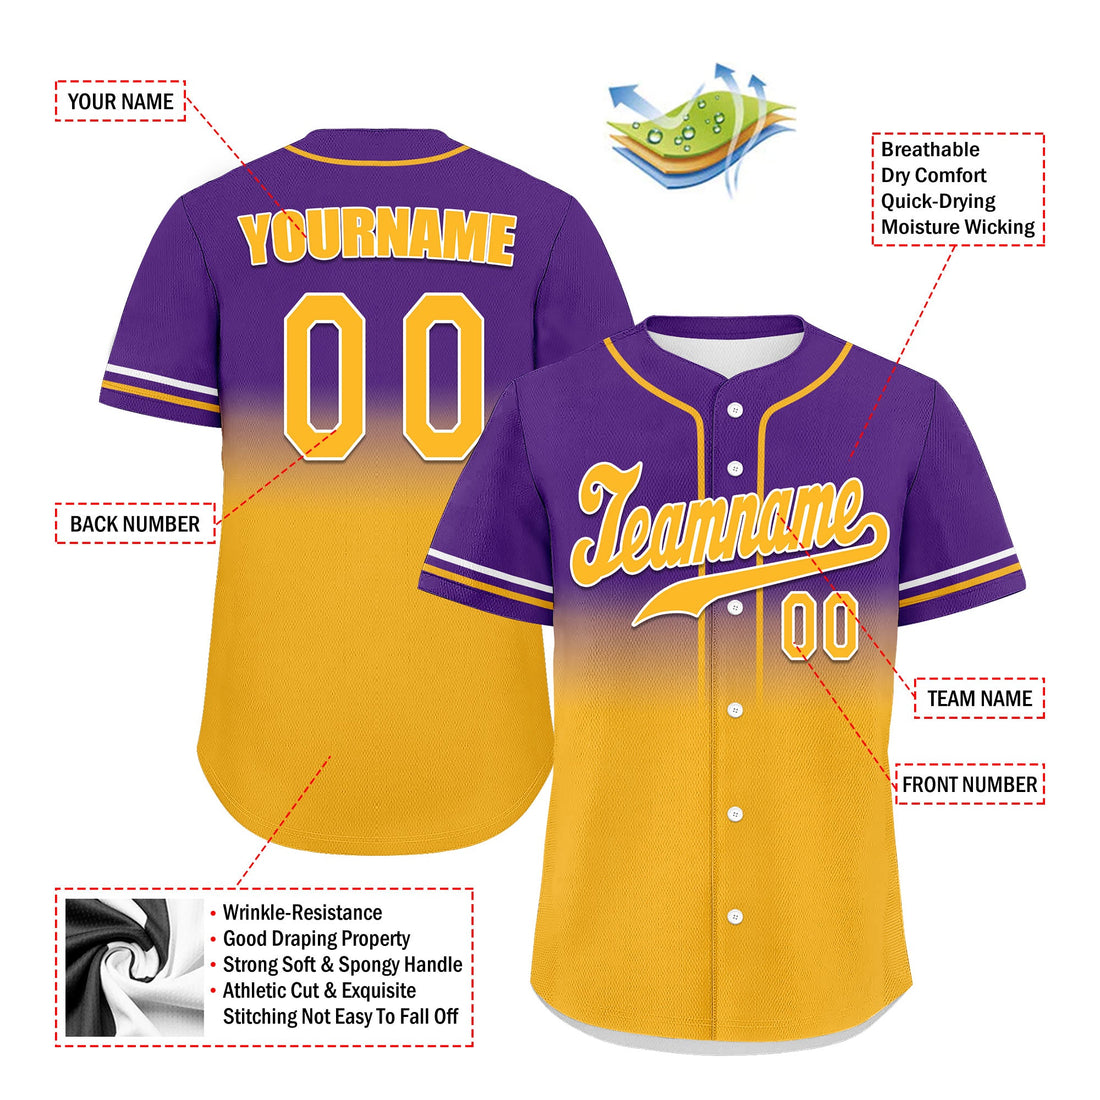 Custom Purple Yellow Fade Fashion Personalized Authentic Baseball Jersey UN002-bd0b007b-8